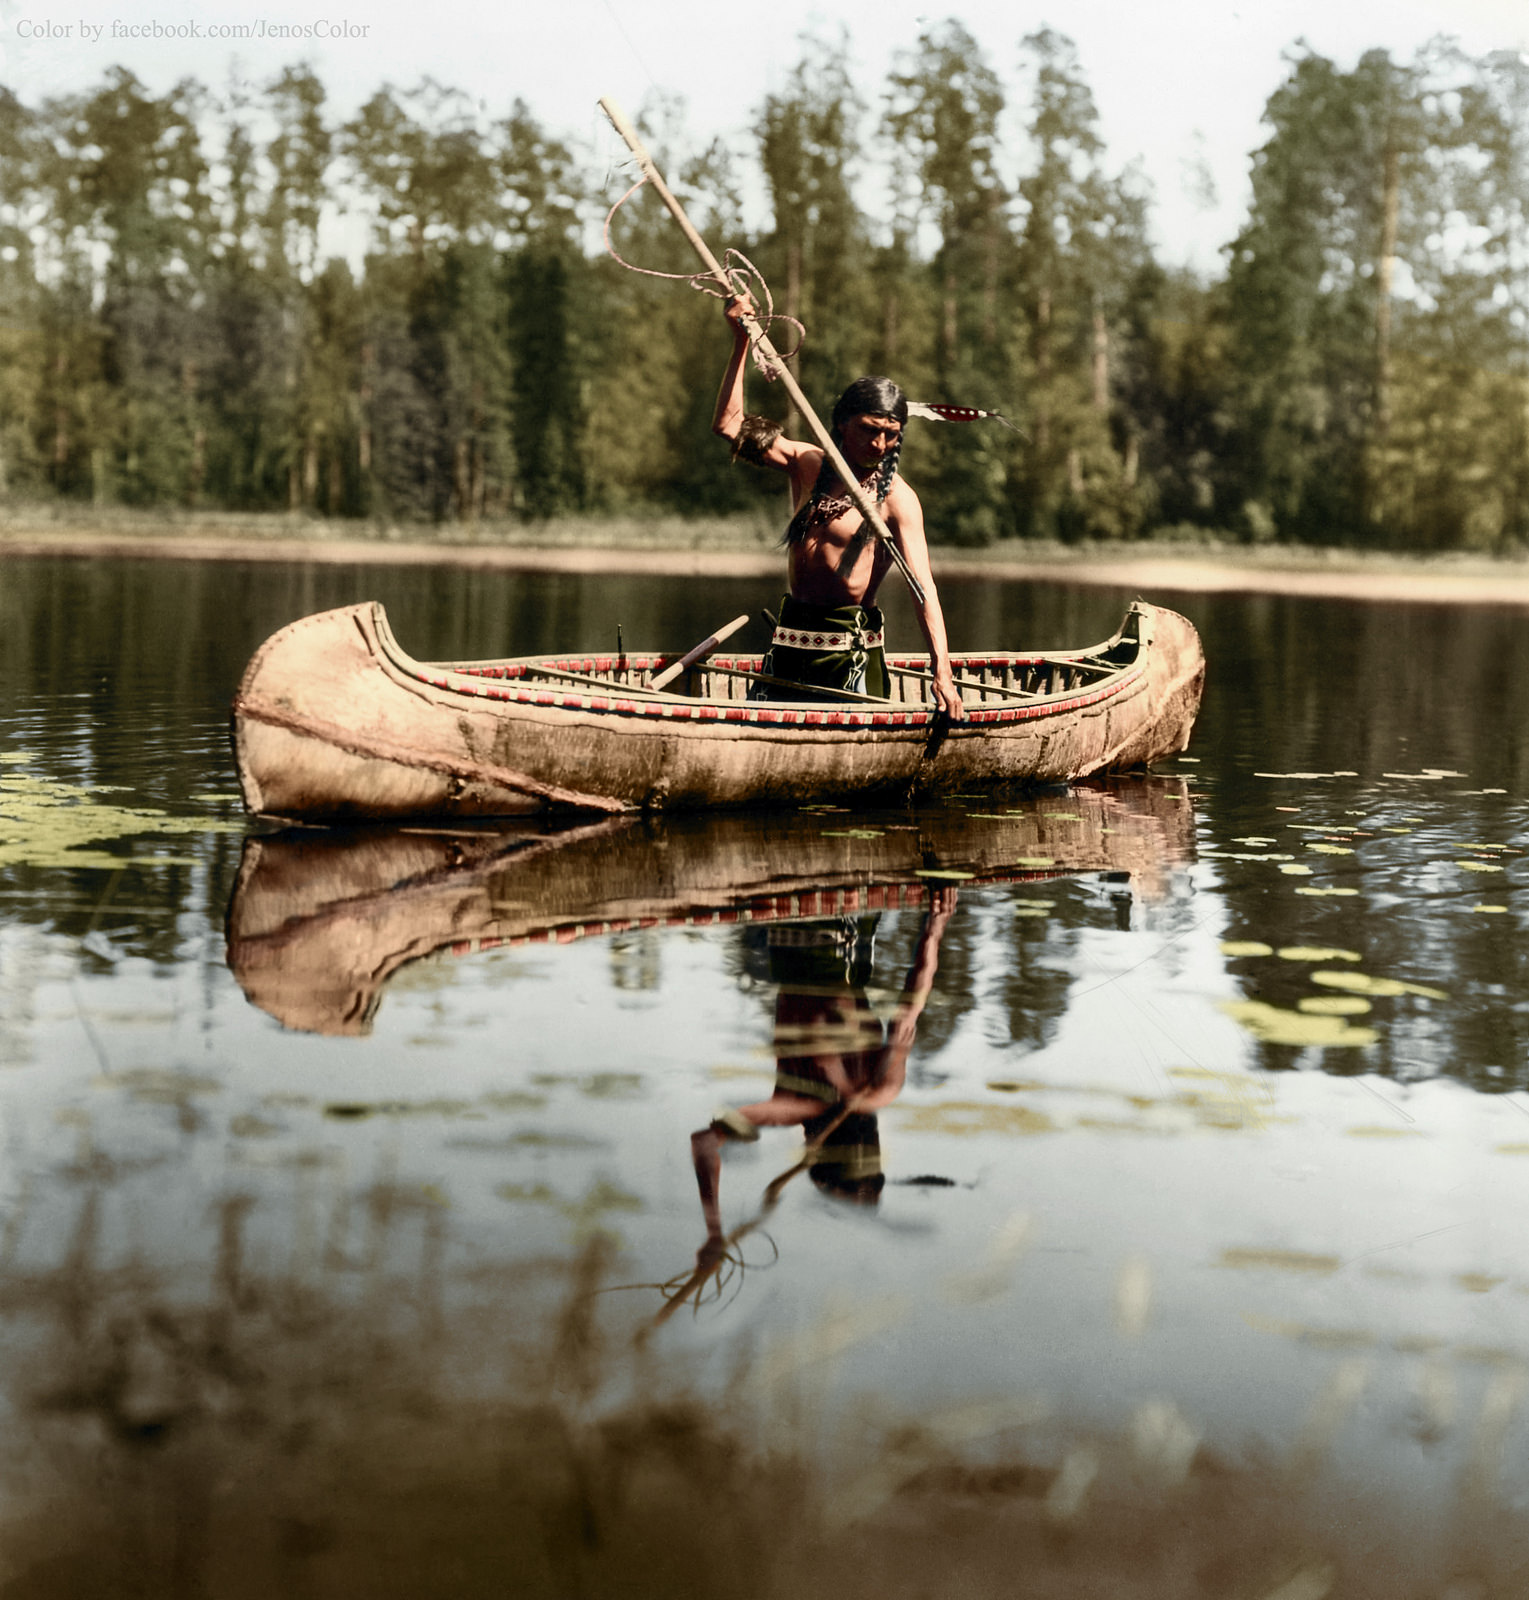 ojibwe spearfishing - In